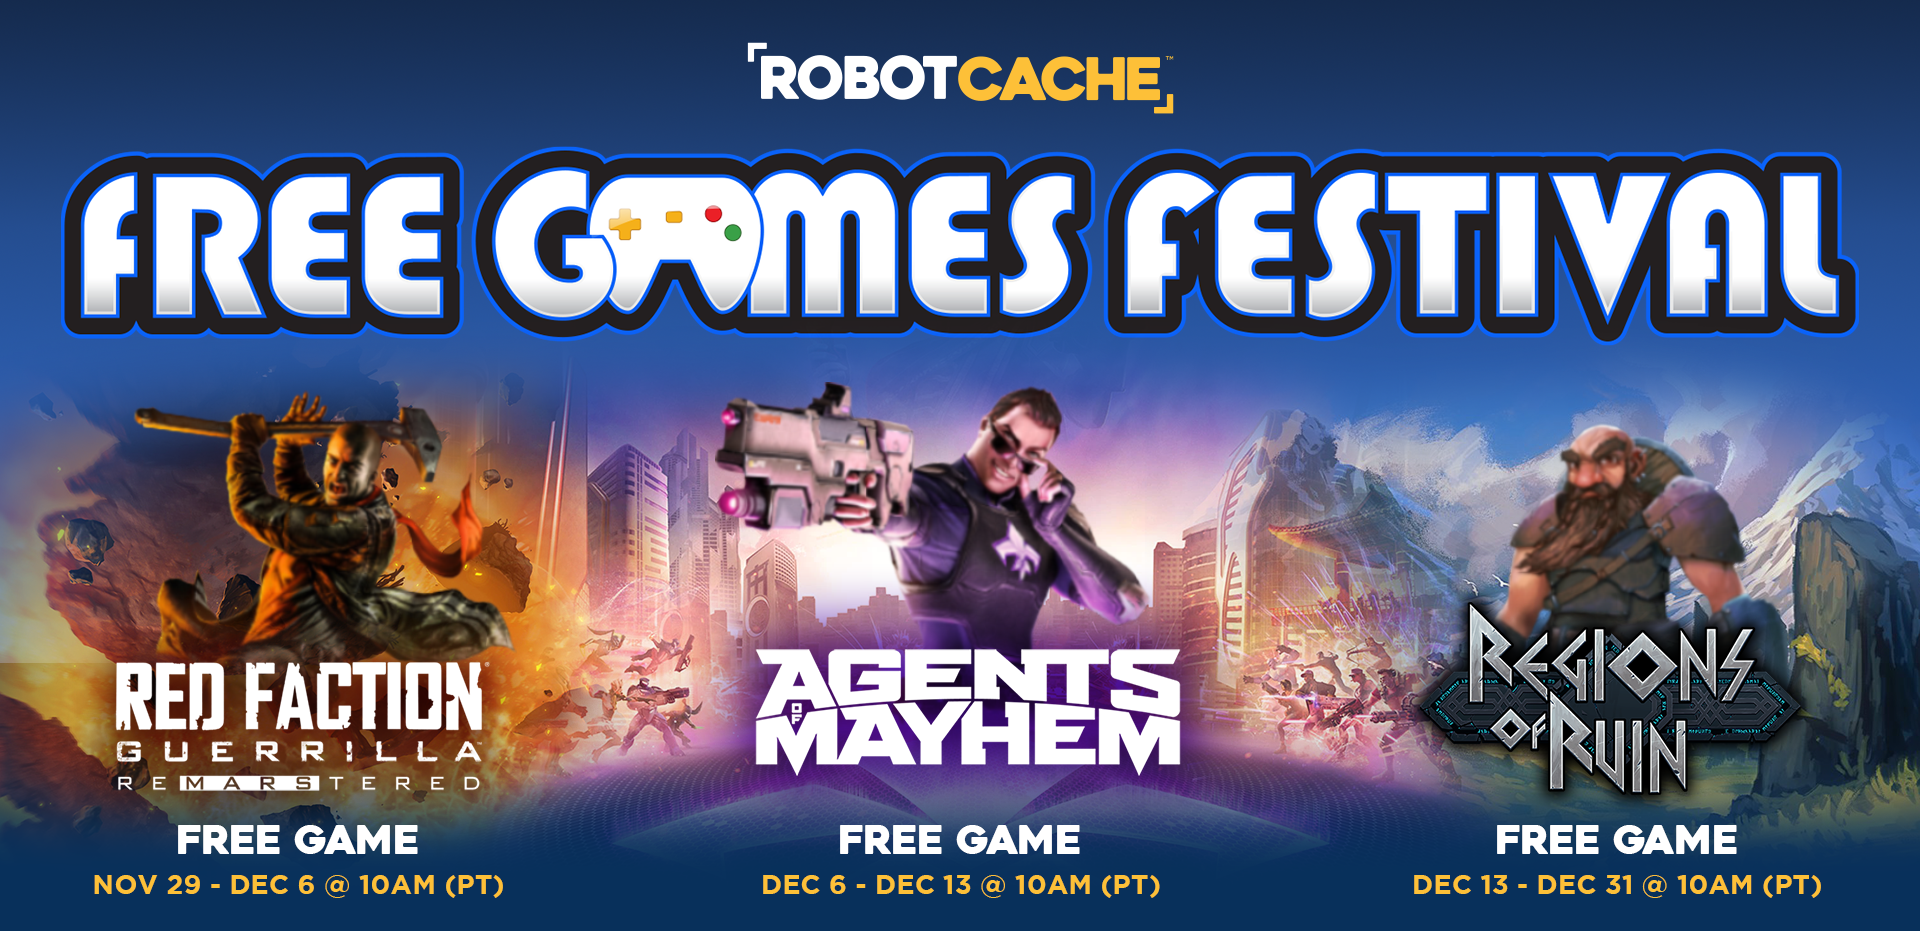 Free Games Festival - Robot Cache